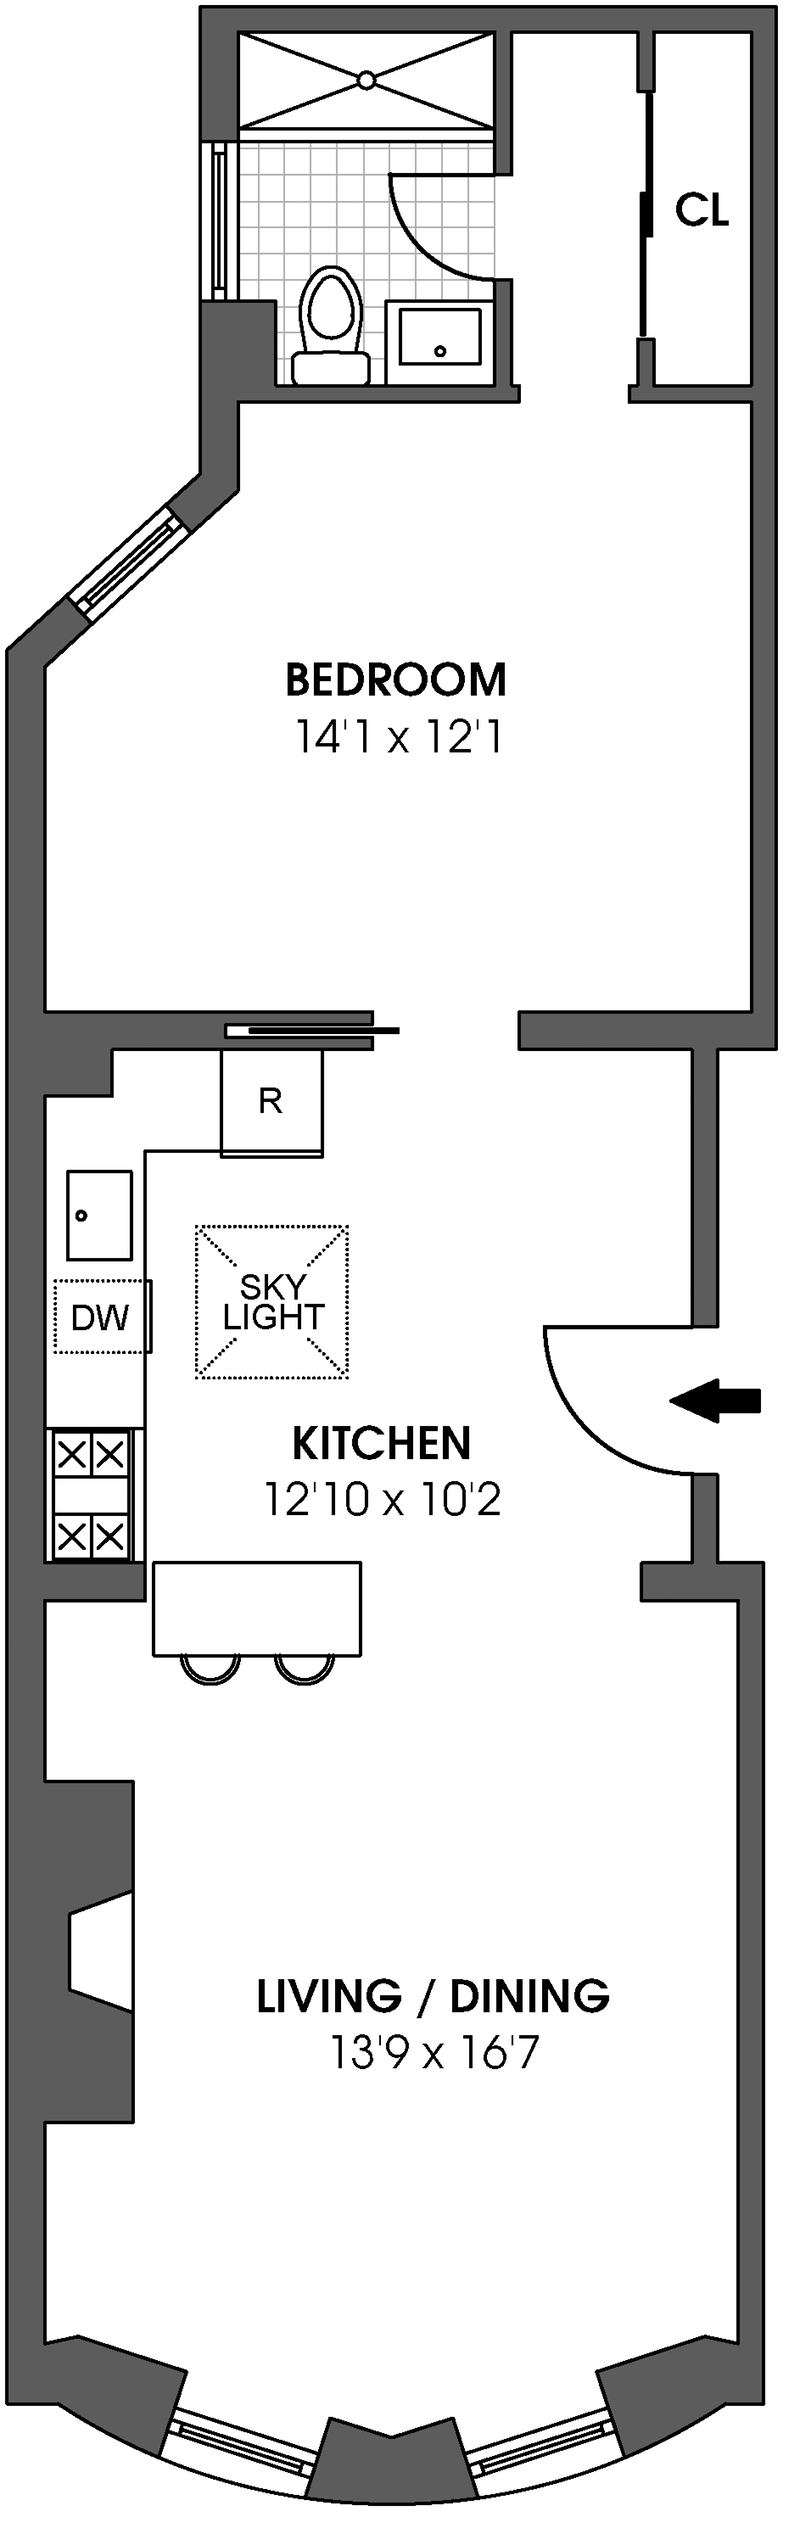 Floorplan for 205 Park Place, 13